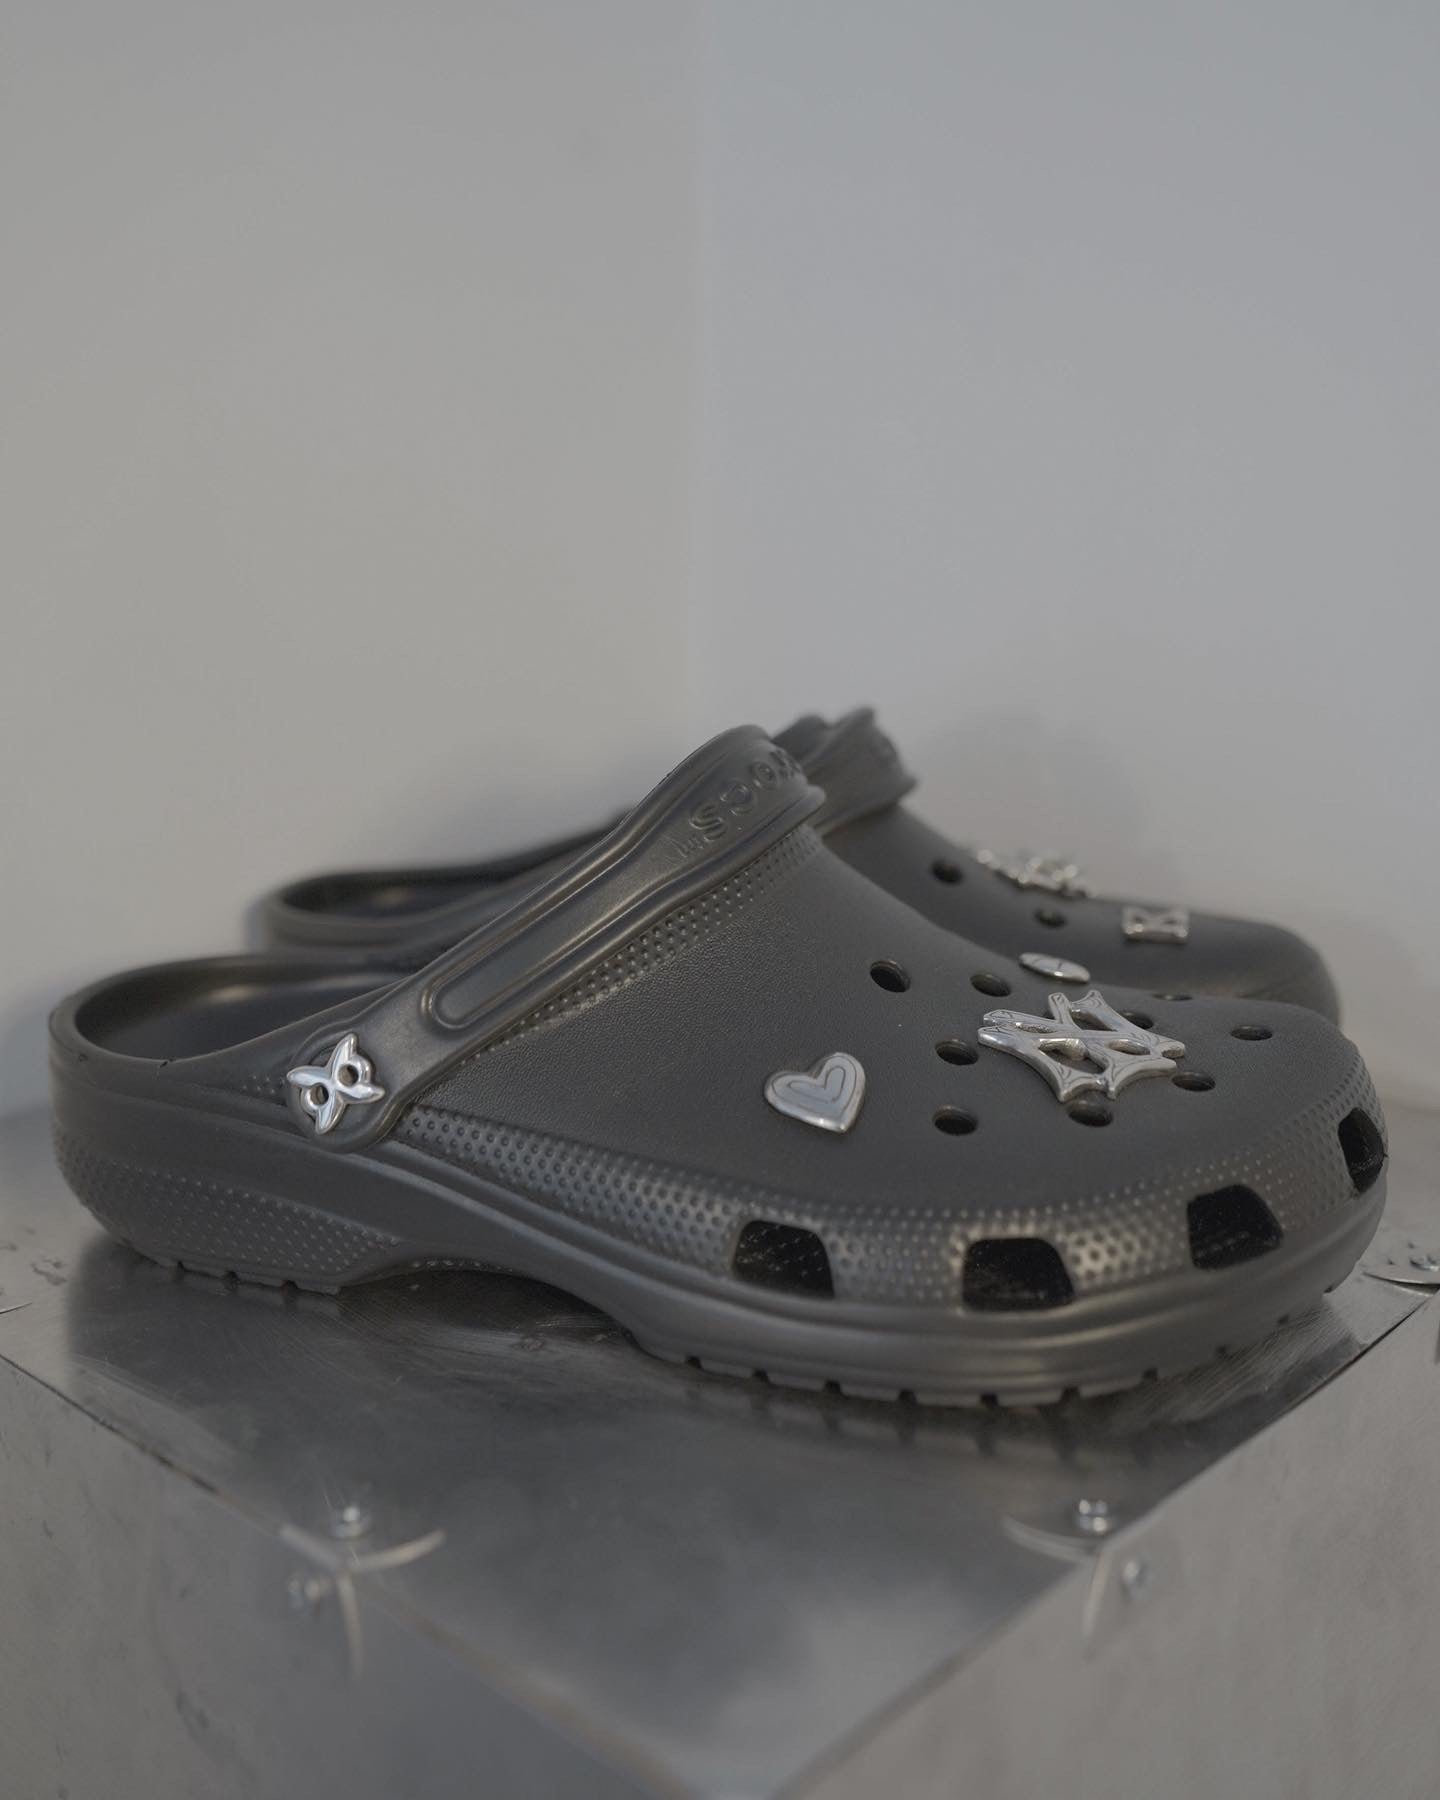 Jibbitz Charms for Crocs – Keenan Ferguson